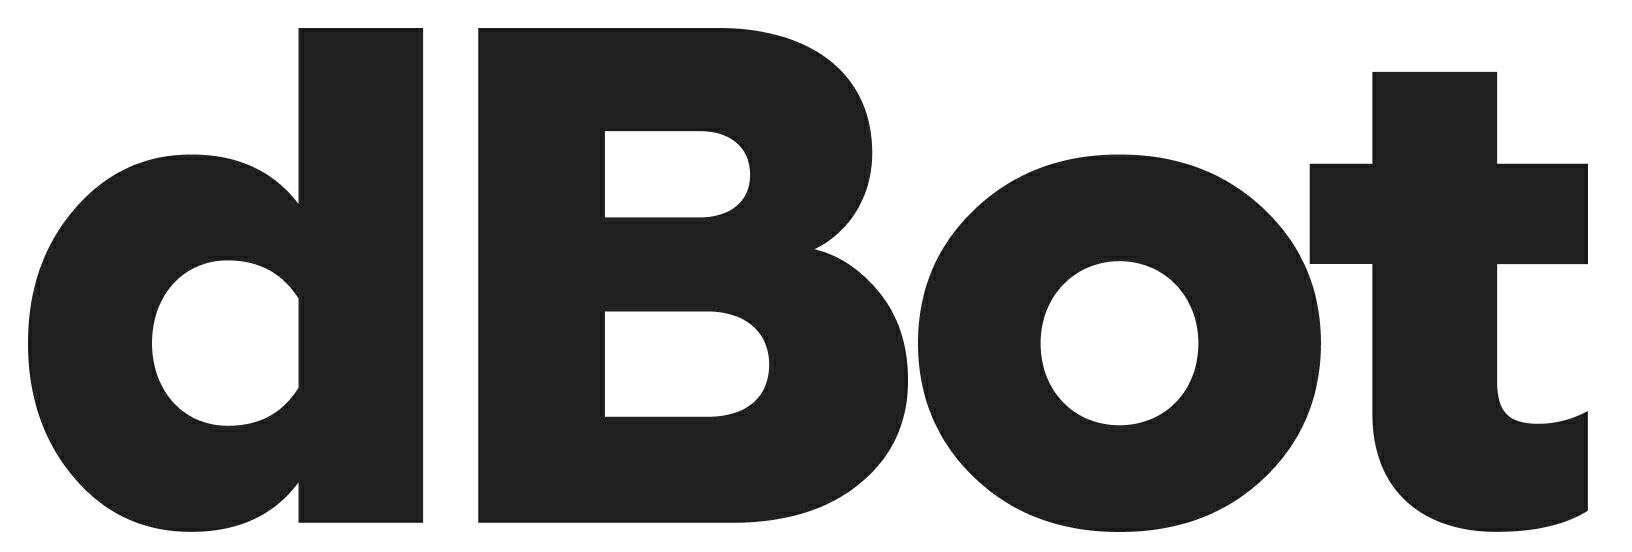 Логотип dBot